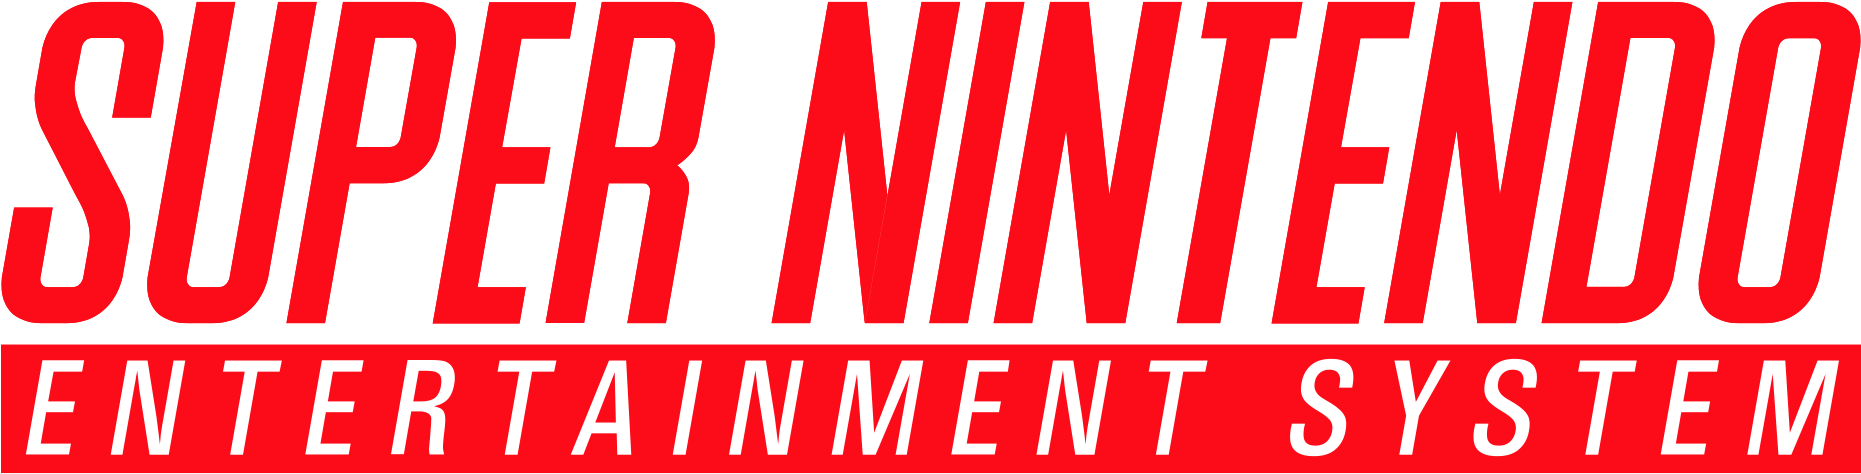 Open - Super Nintendo Entertainment System Logo (2000x571), Png Download